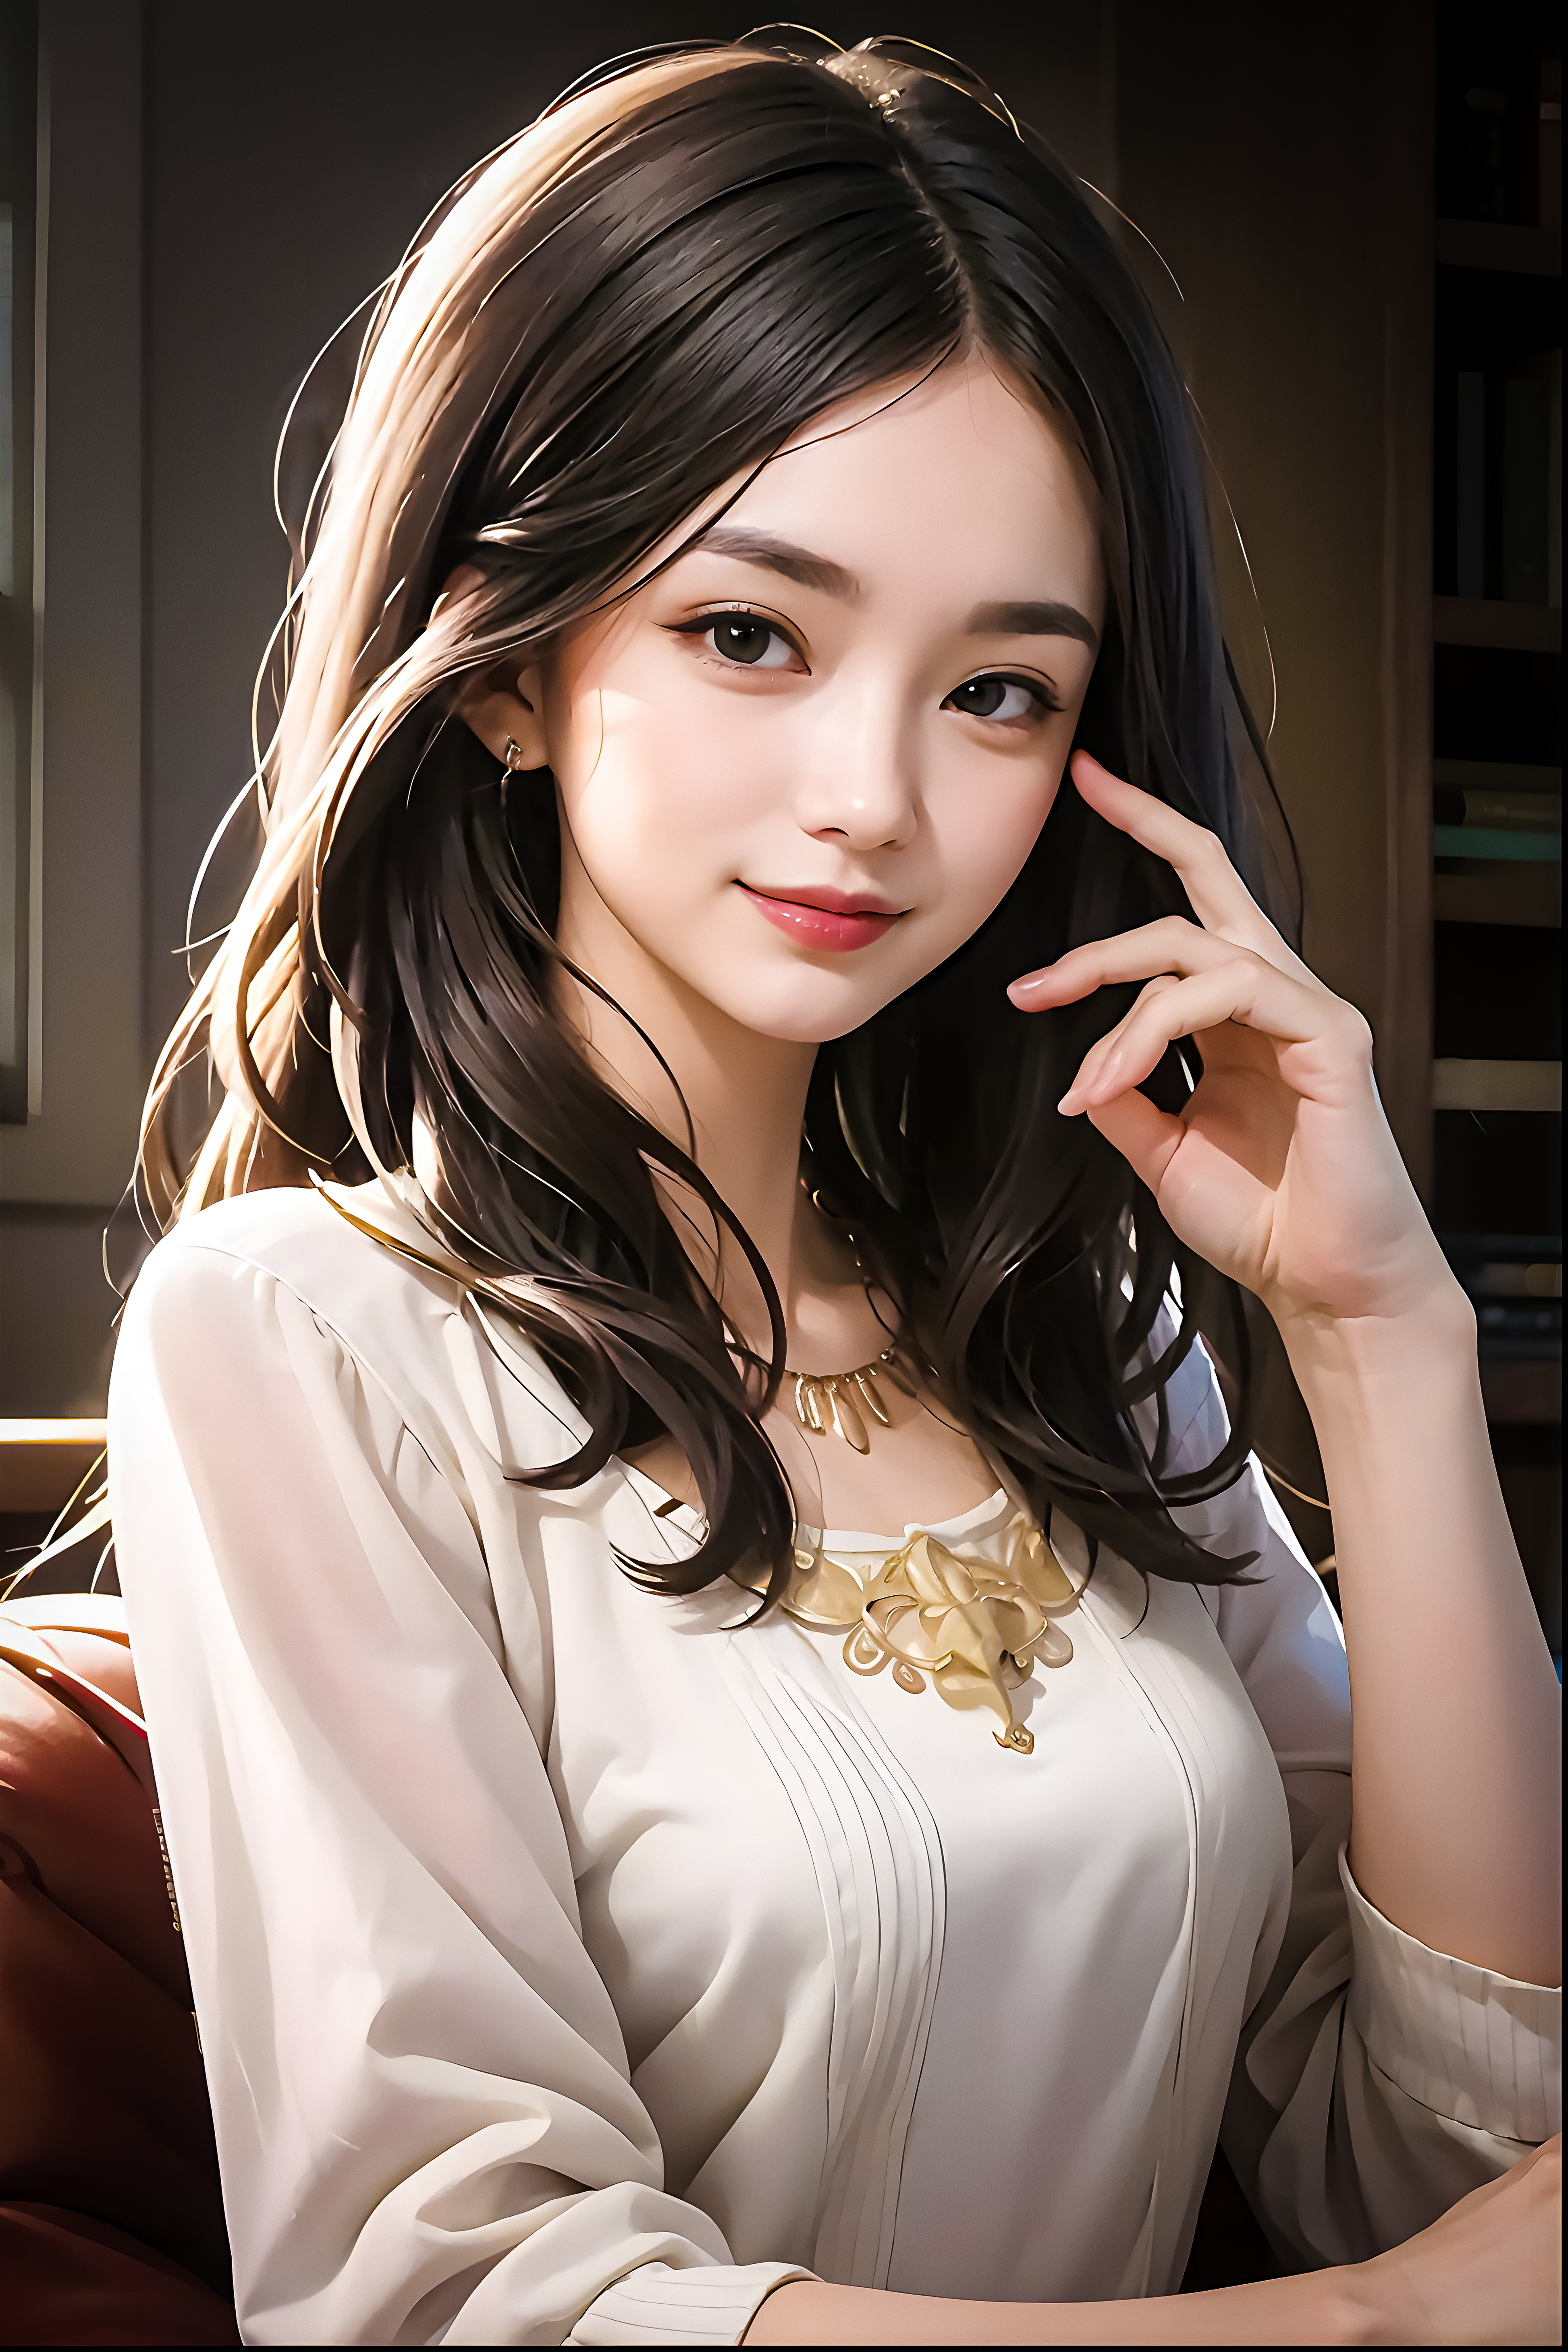 General 3891x5837 long hair dark hair portrait display smiling looking at viewer Asian women necklace AI art